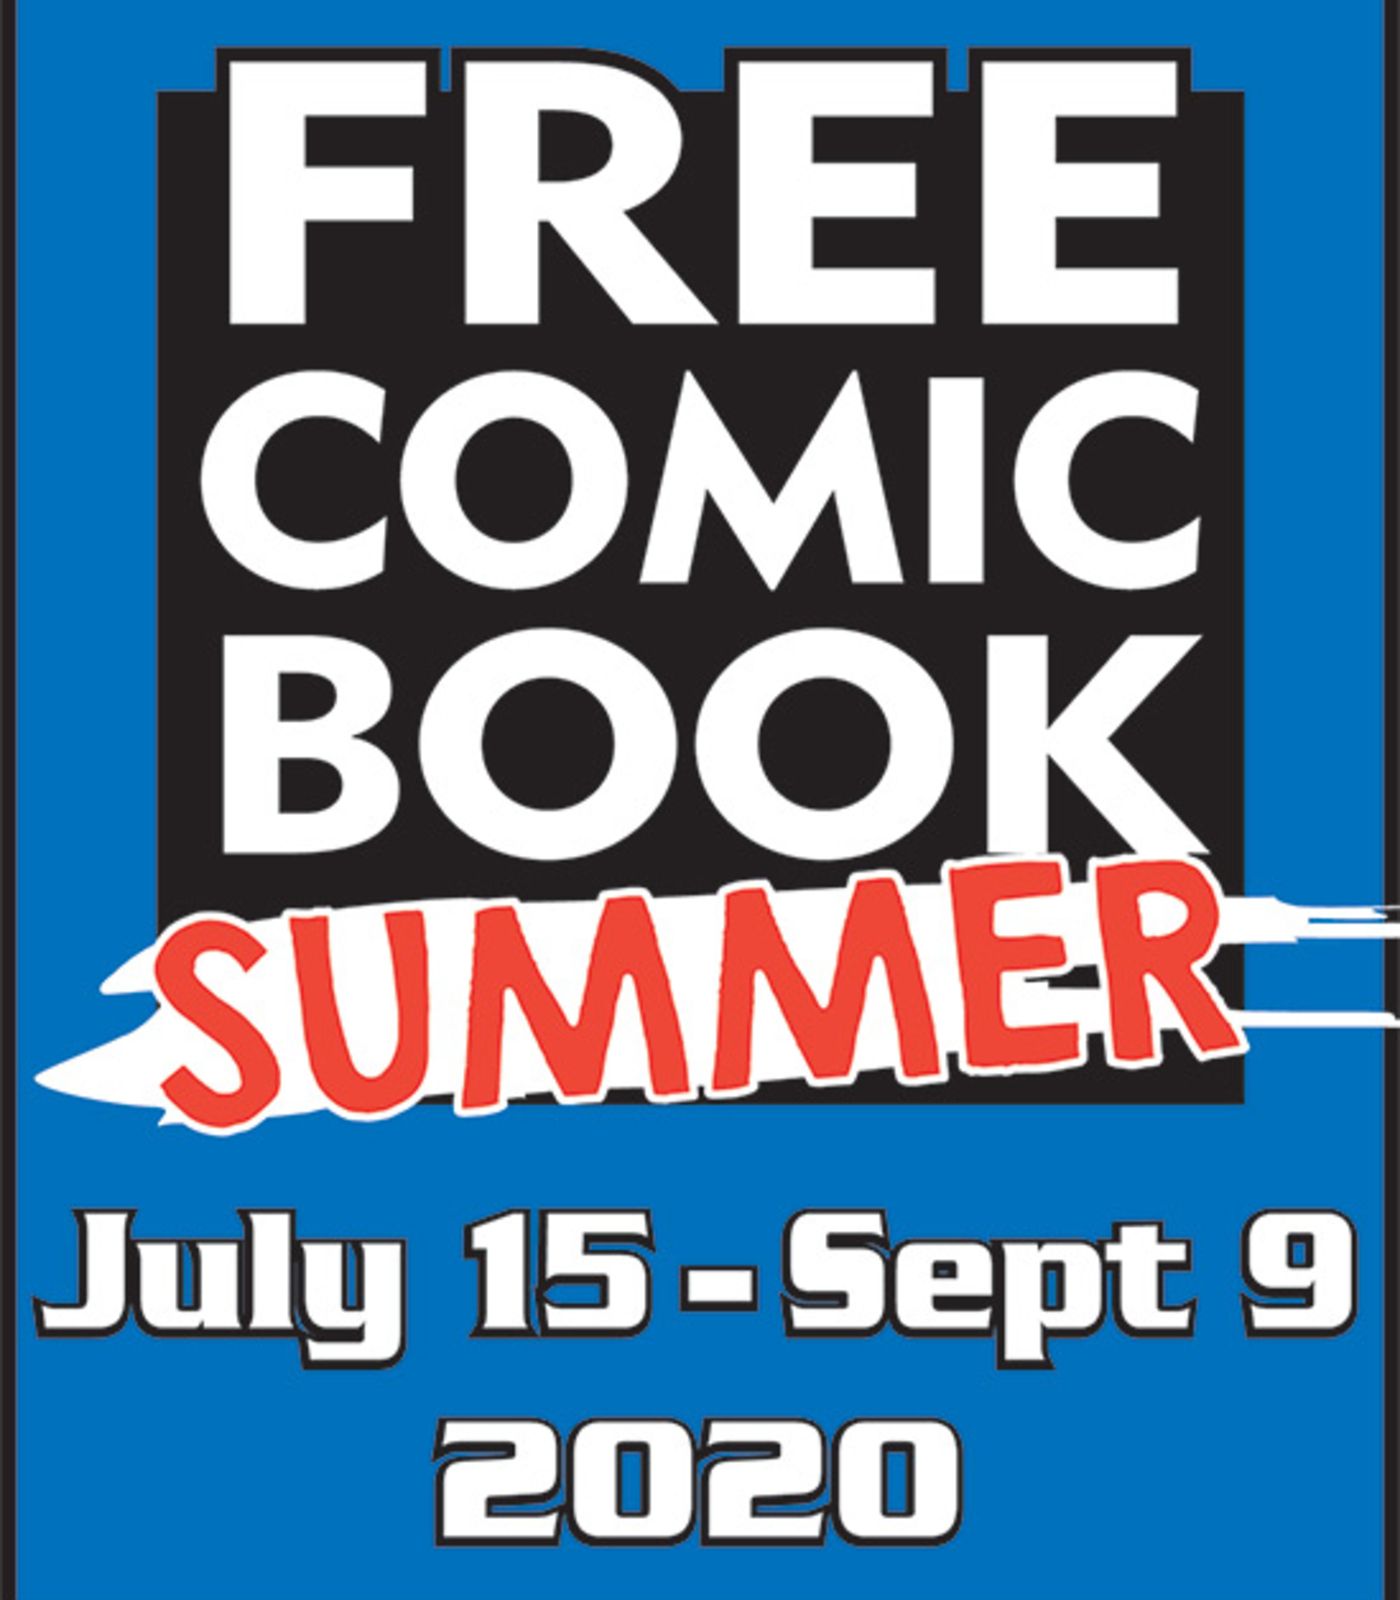 Free Comic Book Summer logo vertical.